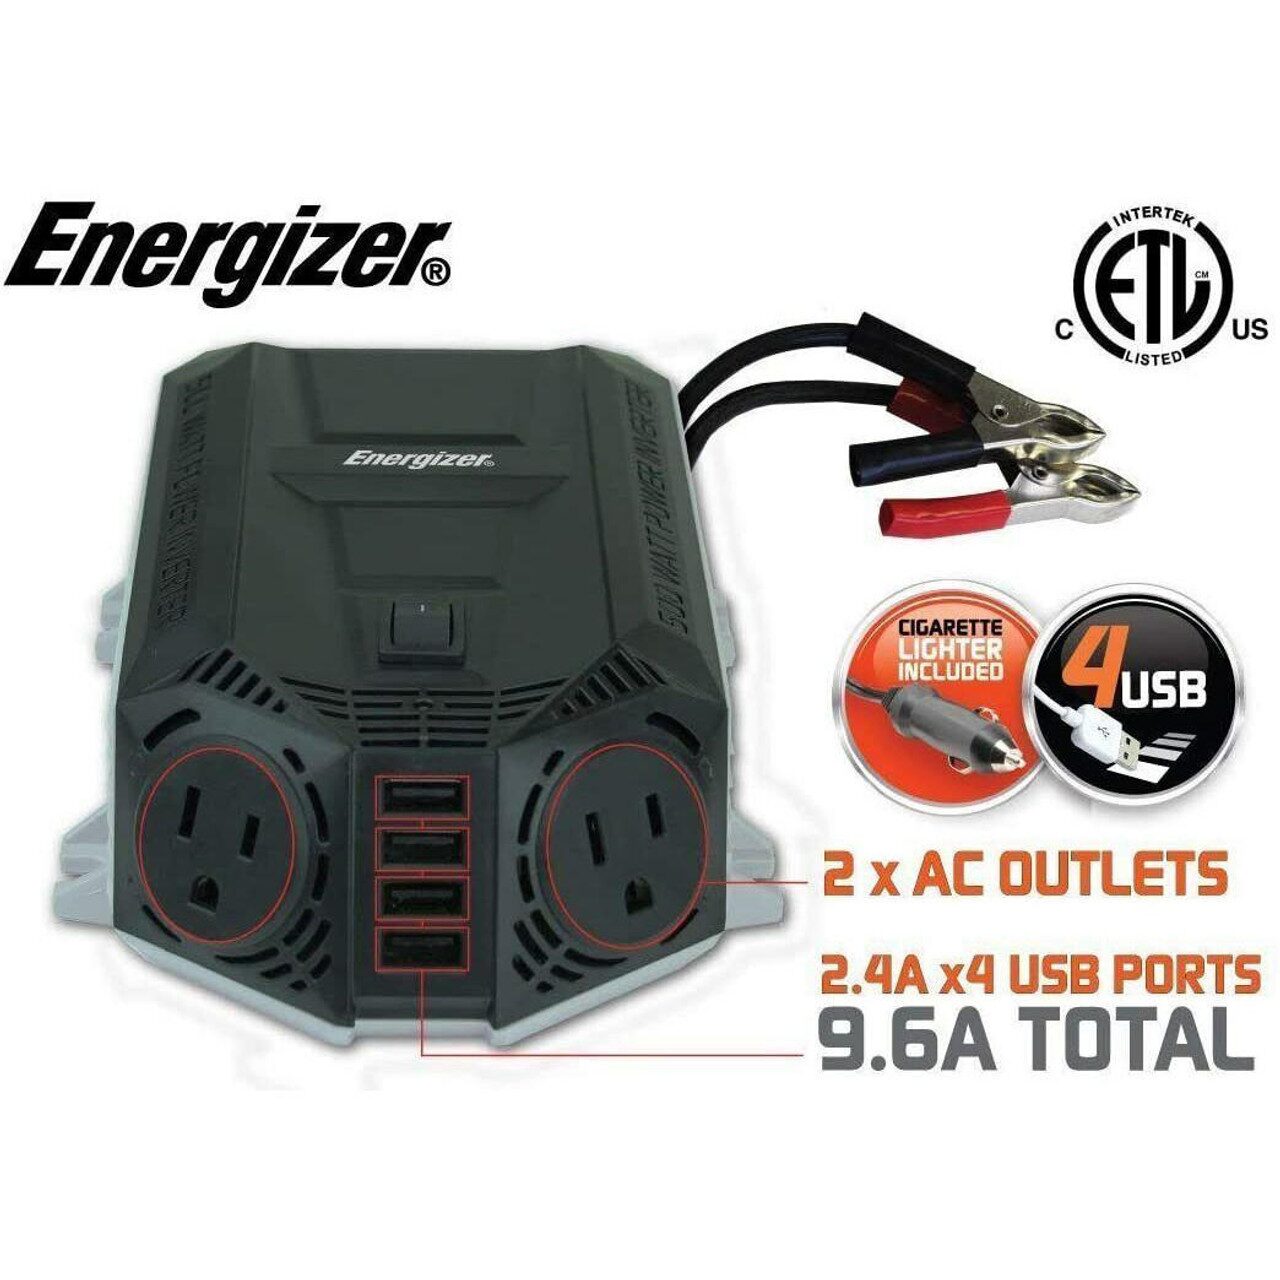 Energizer 500W Power Inverter